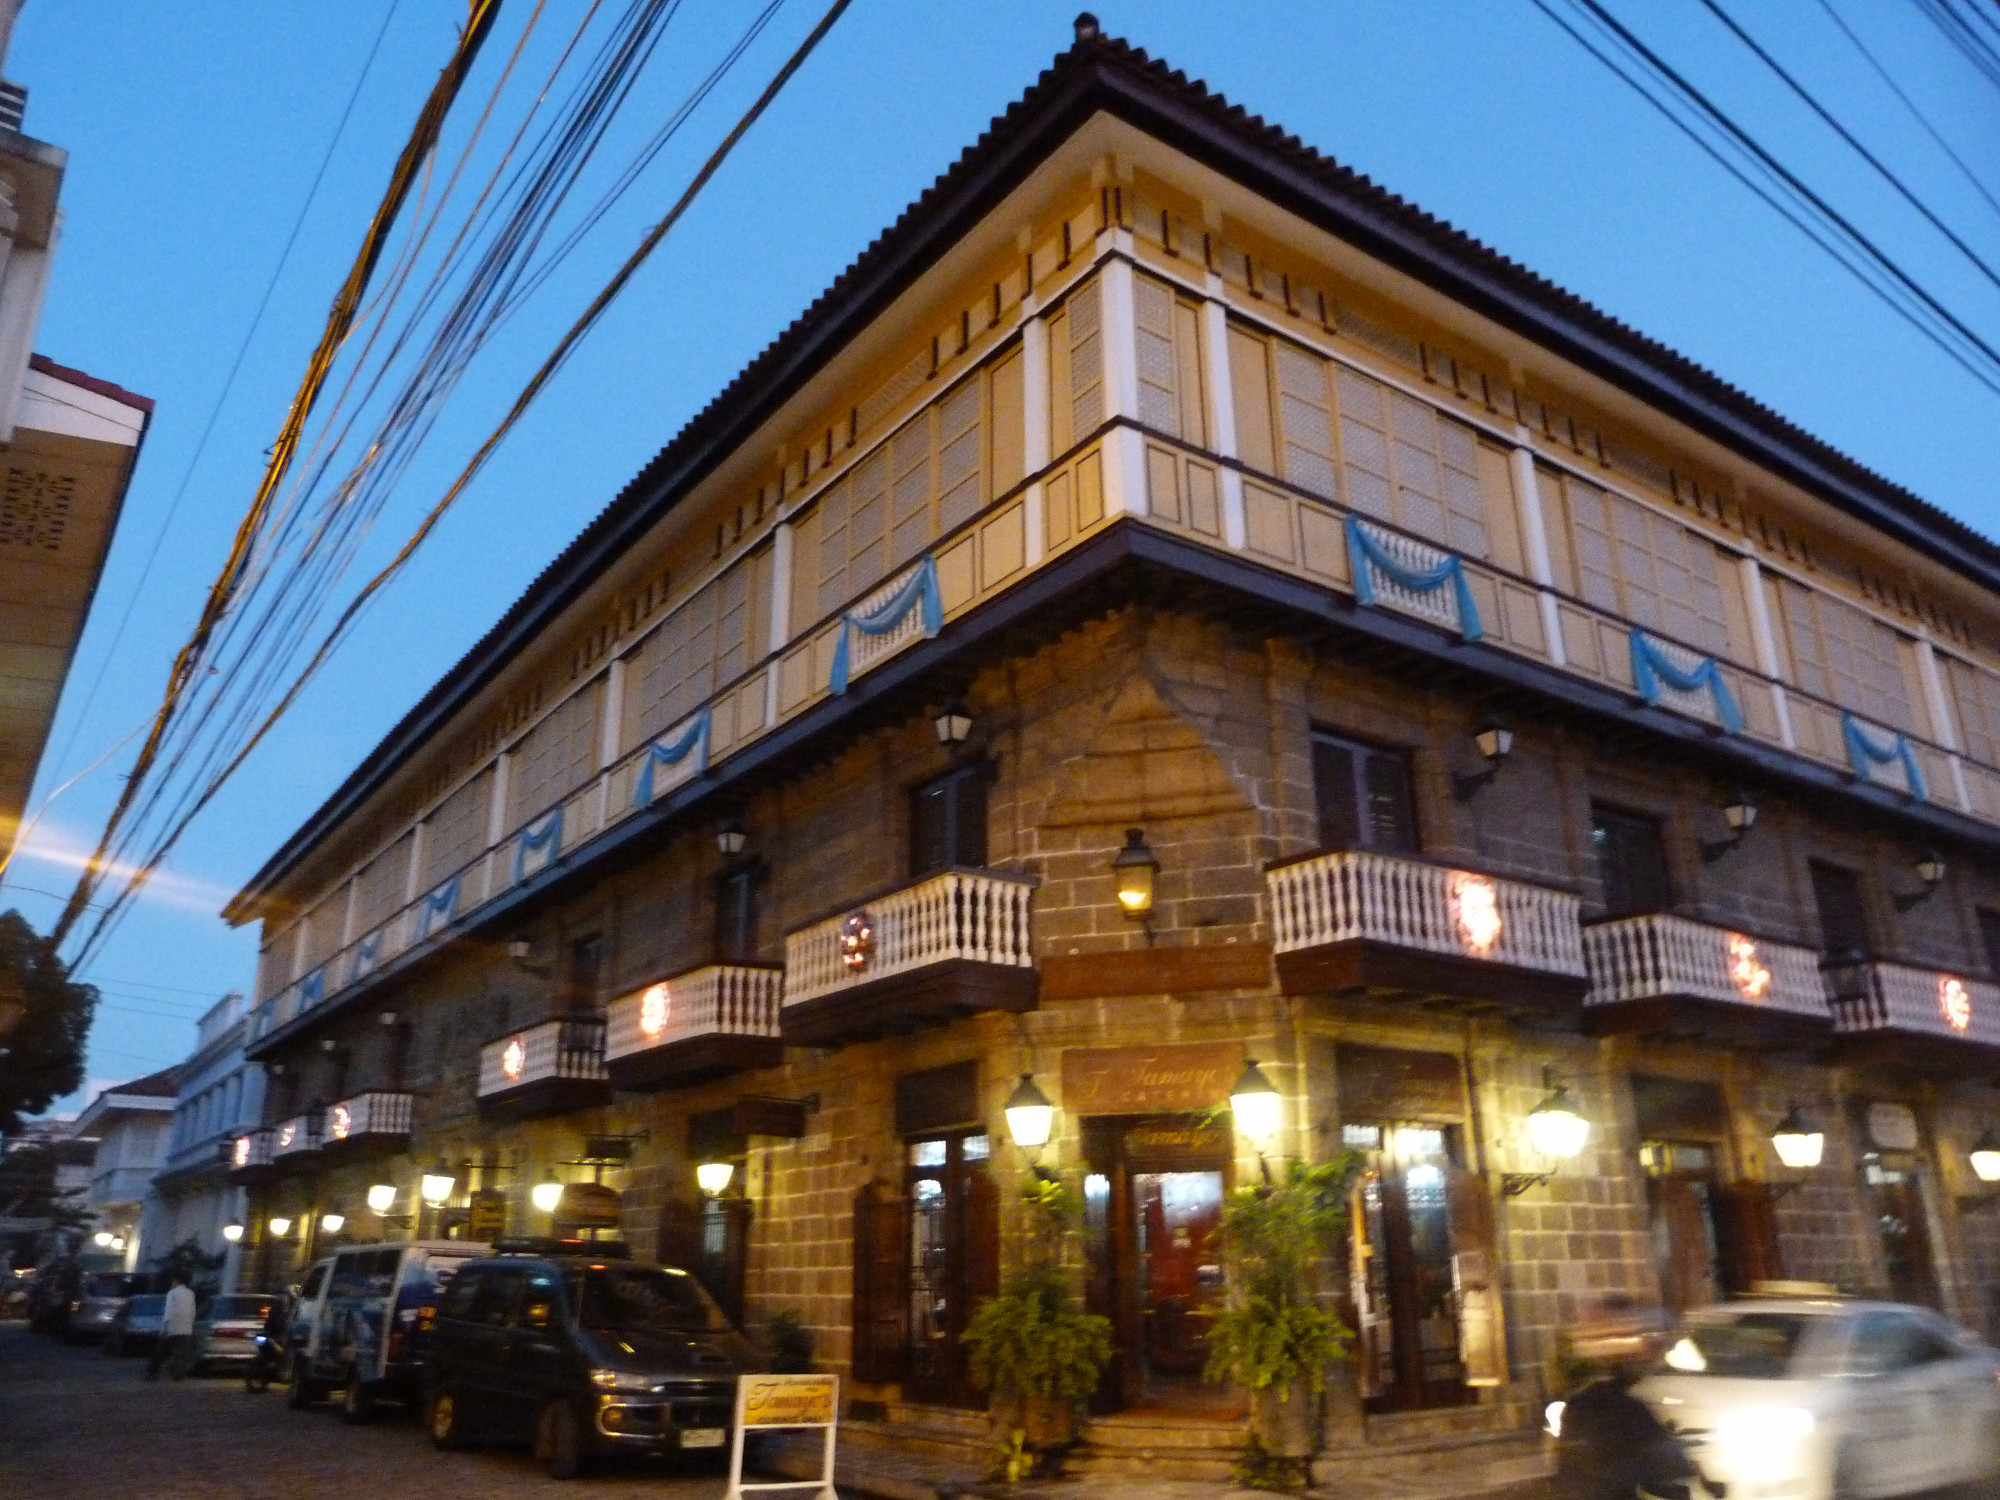 Casa Manila<br/>
Museum